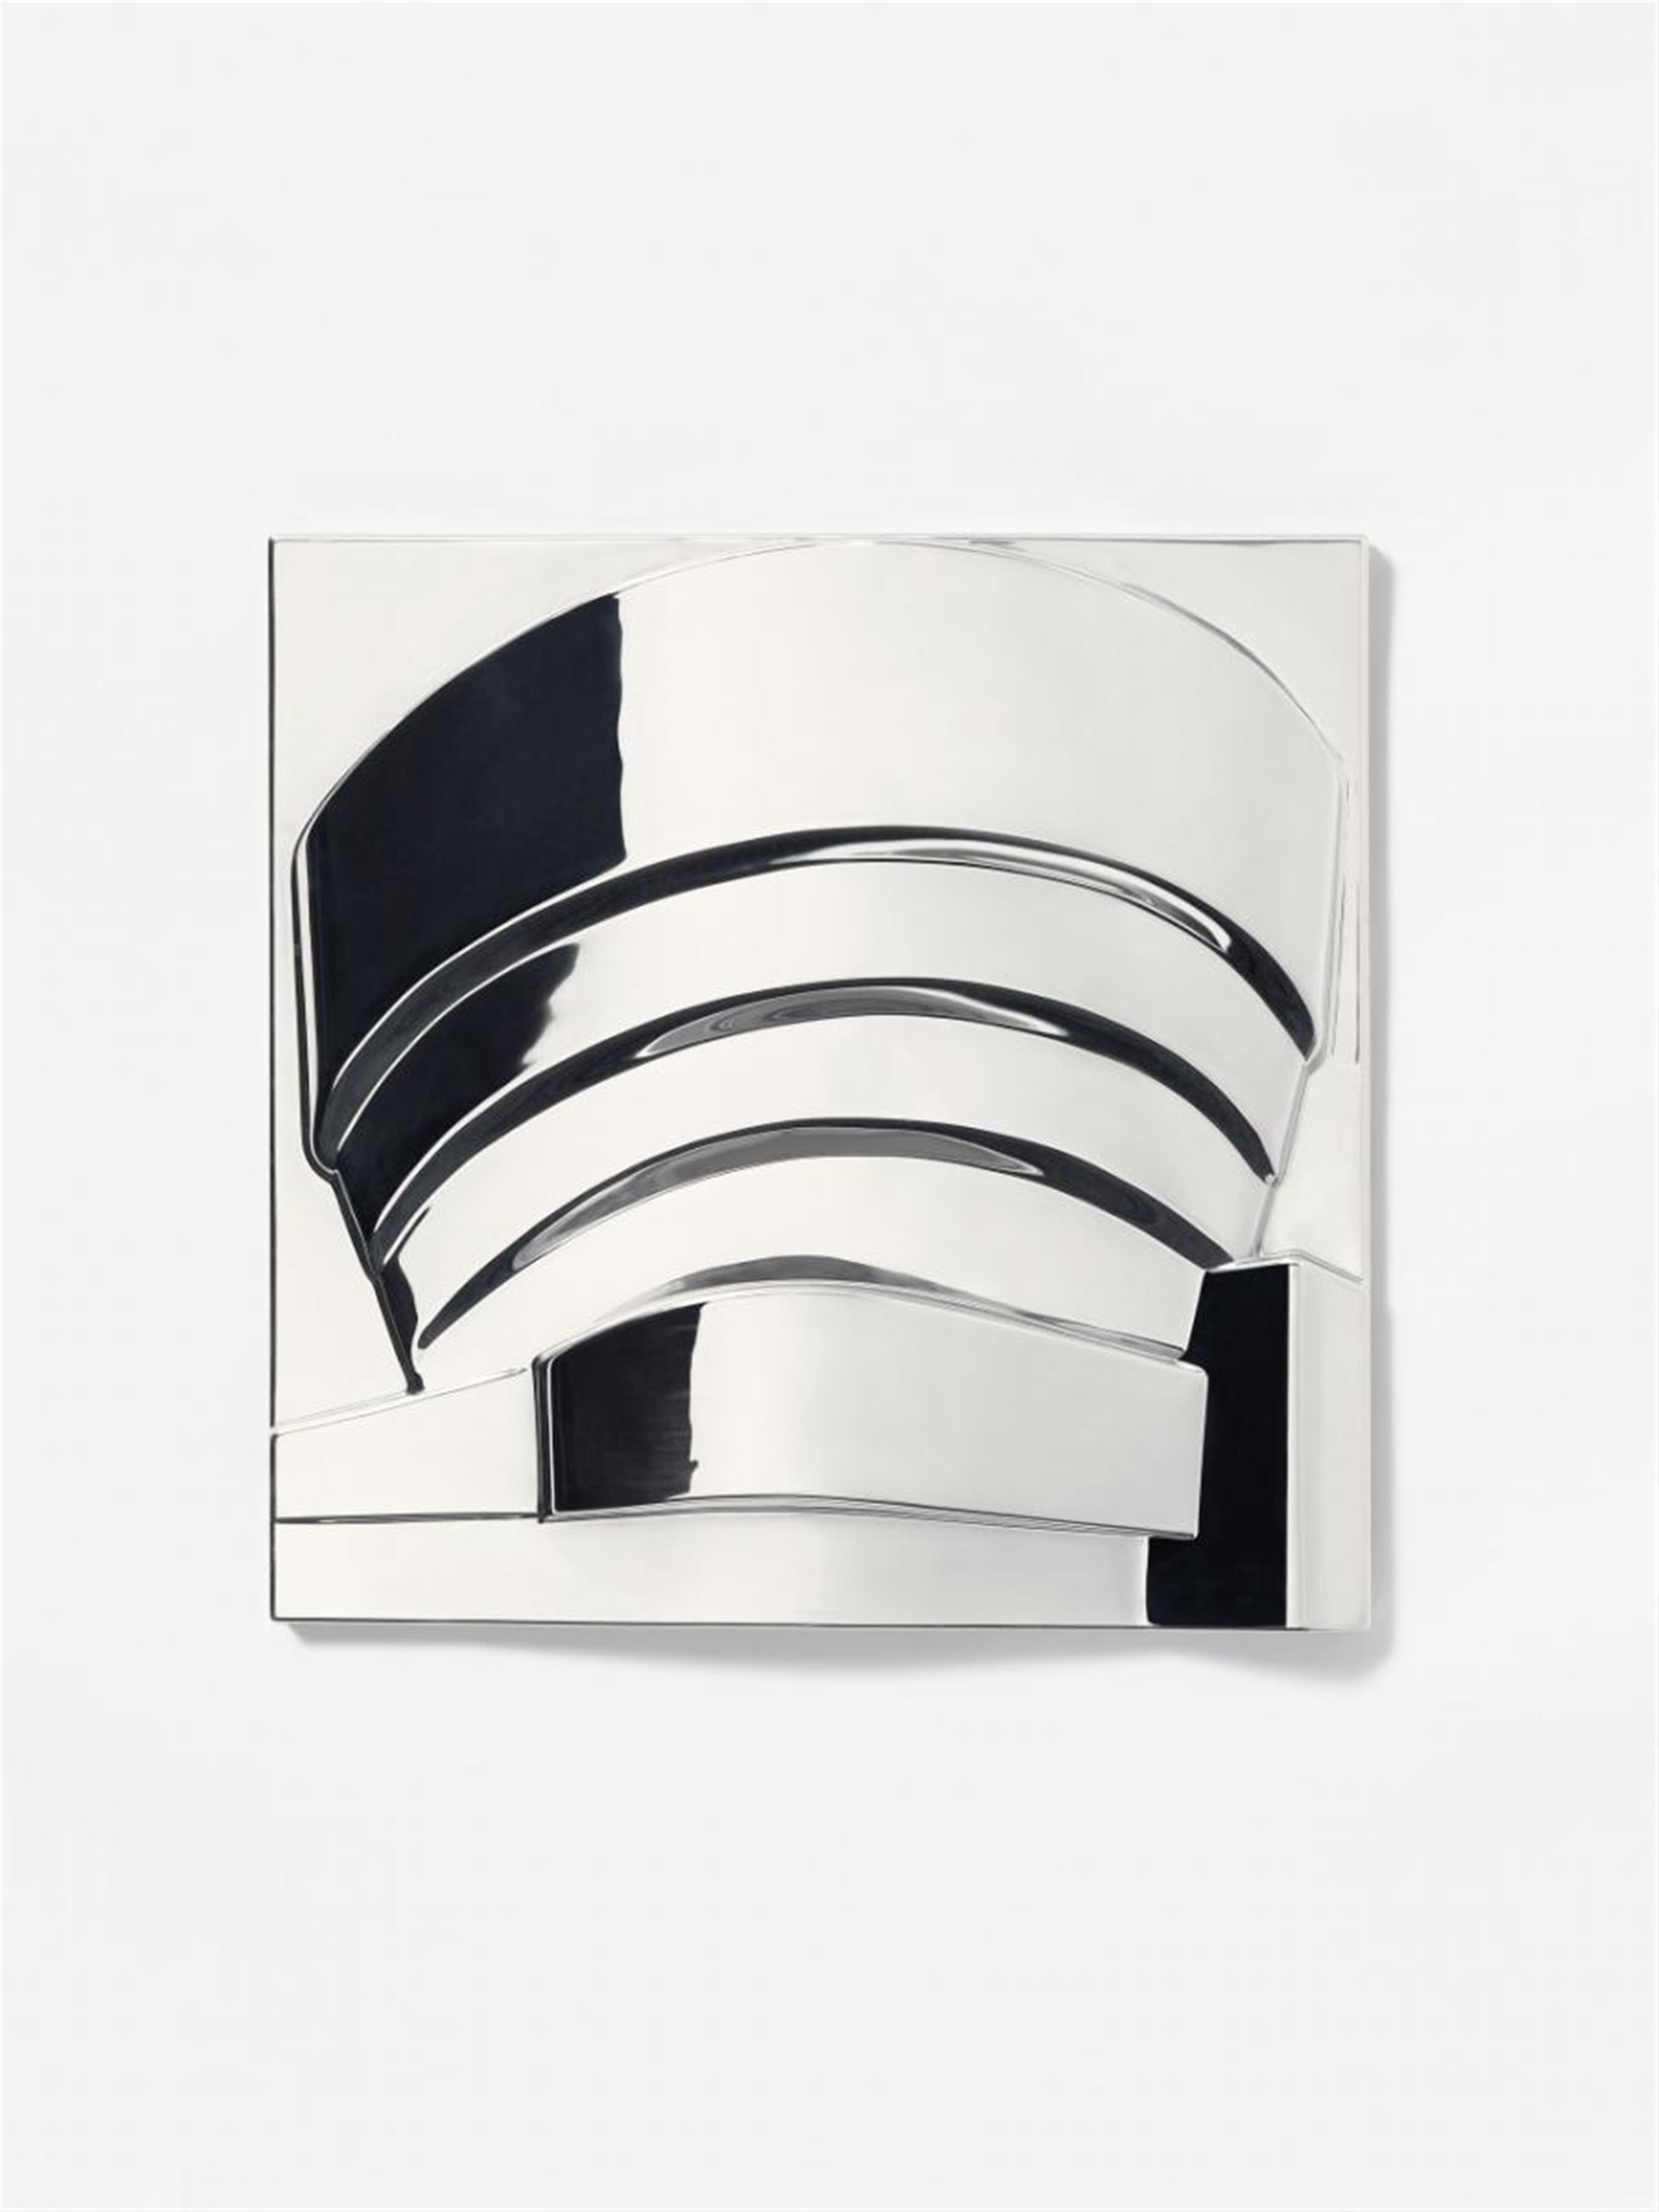 Richard Hamilton - Guggenheim Museum (chrome) - image-1